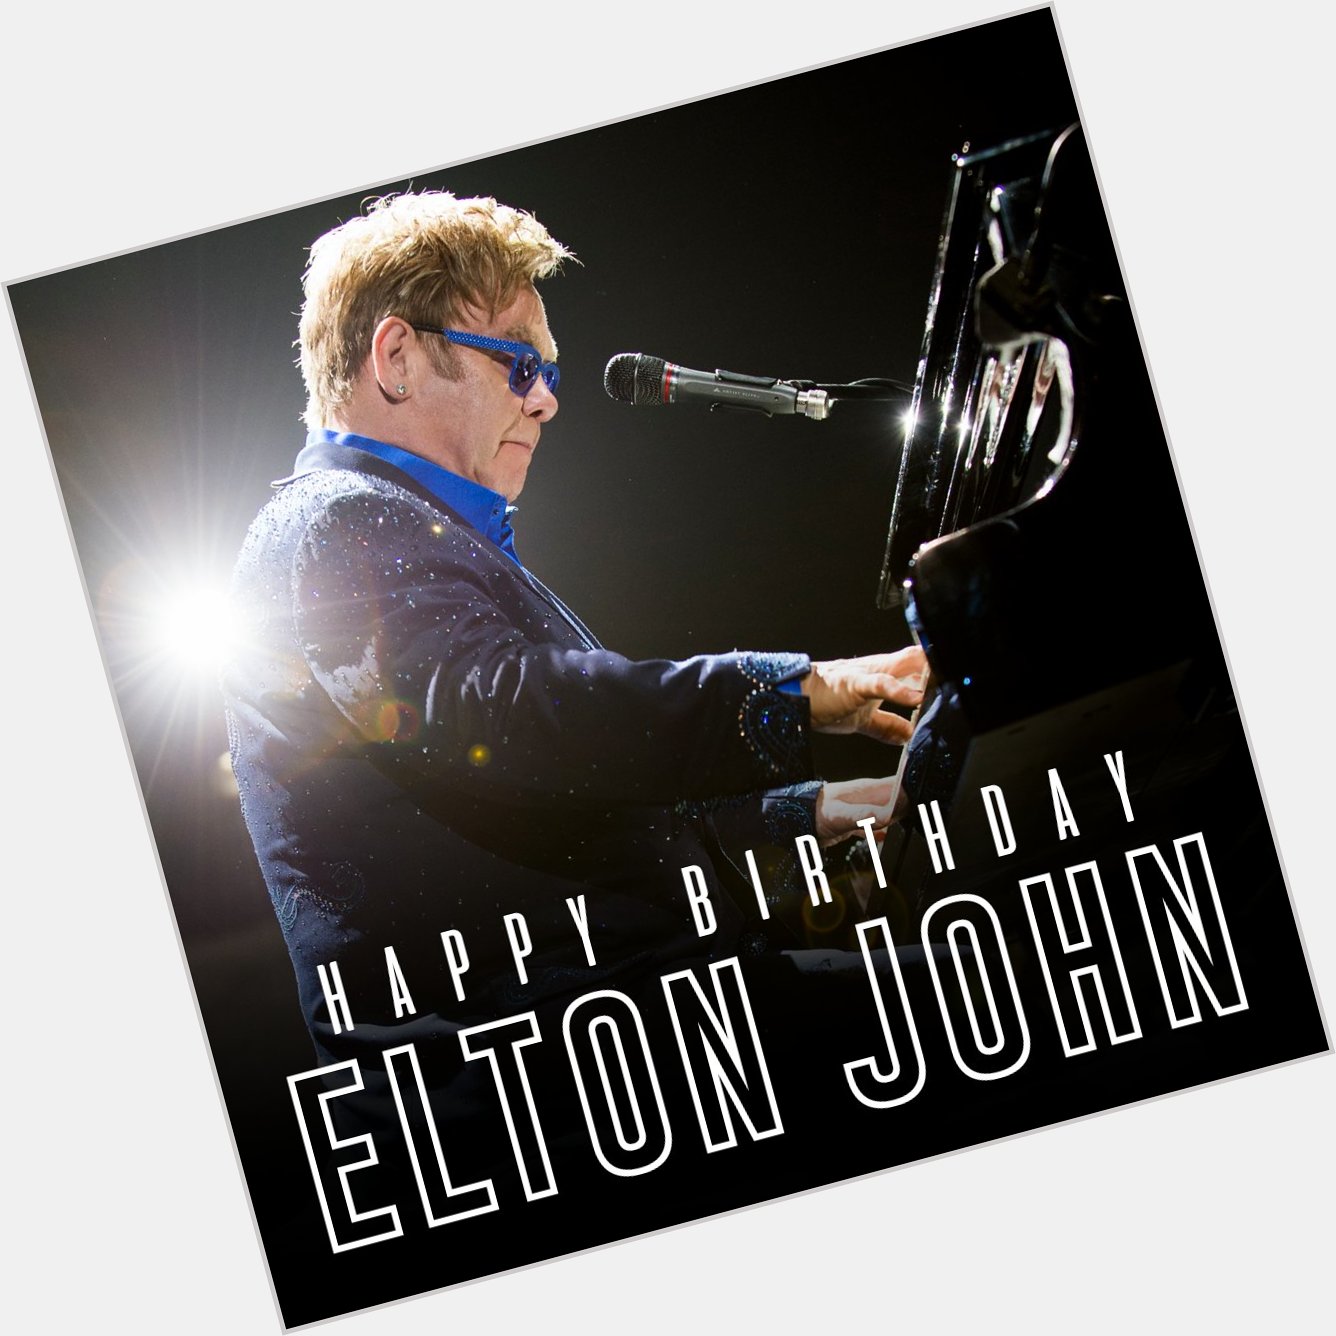 Happy Birthday Elton John!    